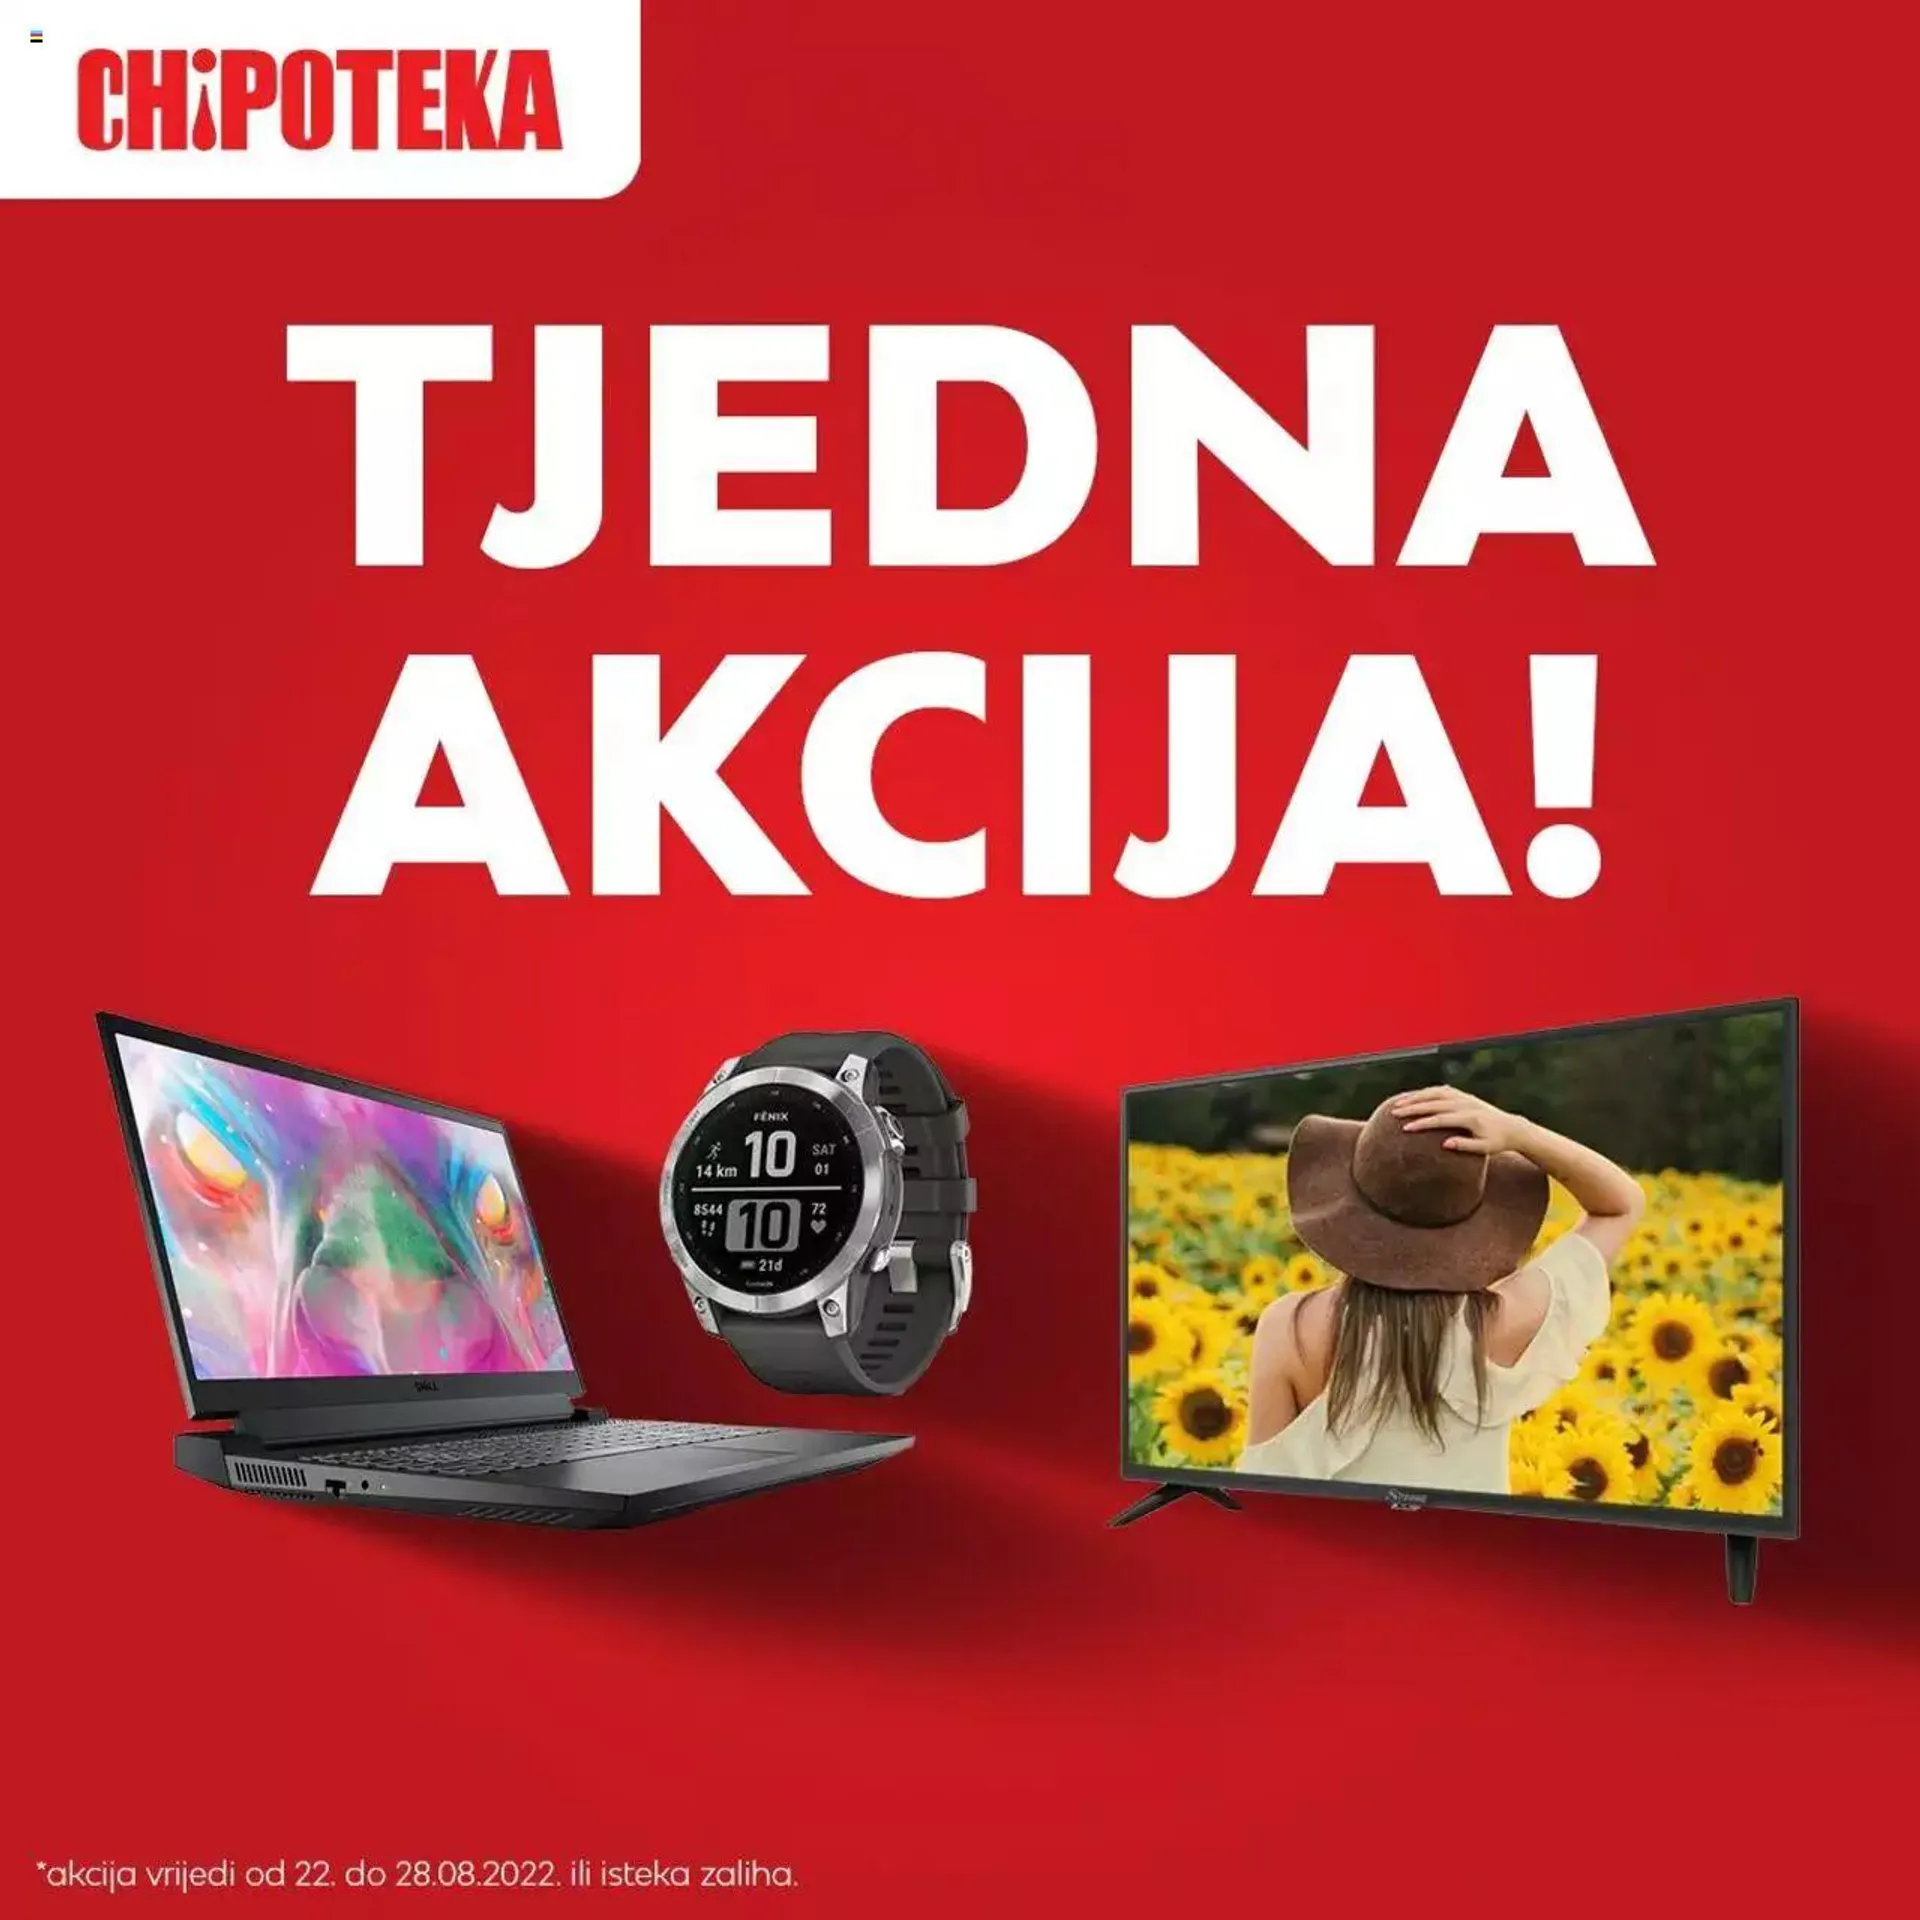 Chipoteka - Katalog - 0